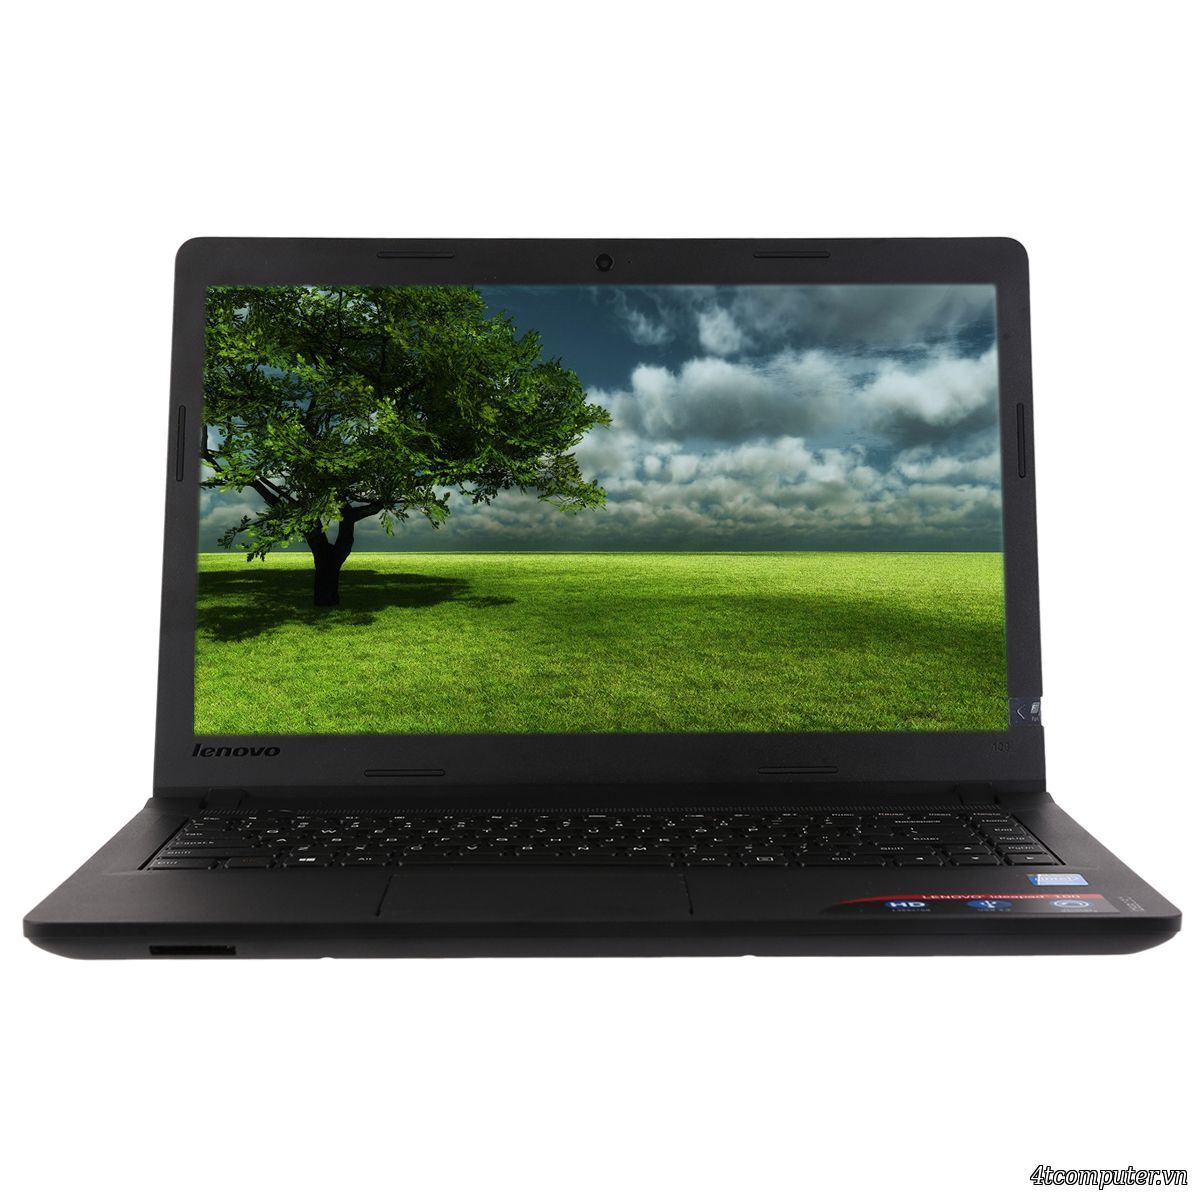 Laptop Lenovo IdeaPad 100 15IBY 80MJ0030VN - Intel® Pentium® Processor N3540 2.66 GHz, 2GB RAM, 500GB HDD, Integrated Intel® Graphics, 15.6 inh